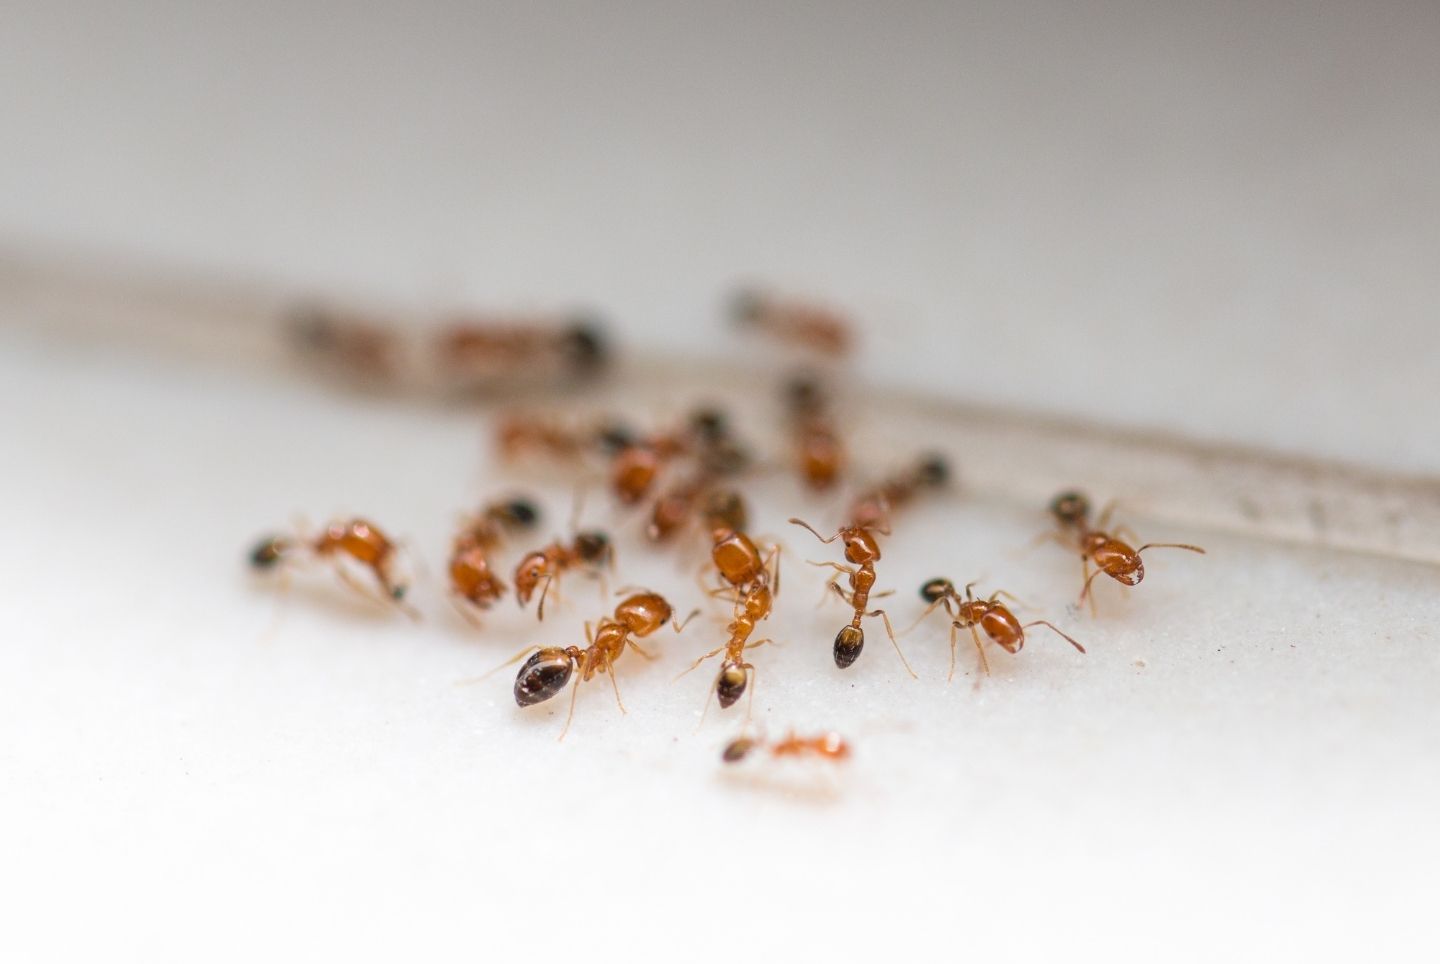 Hur blir man av med myror inomhus?